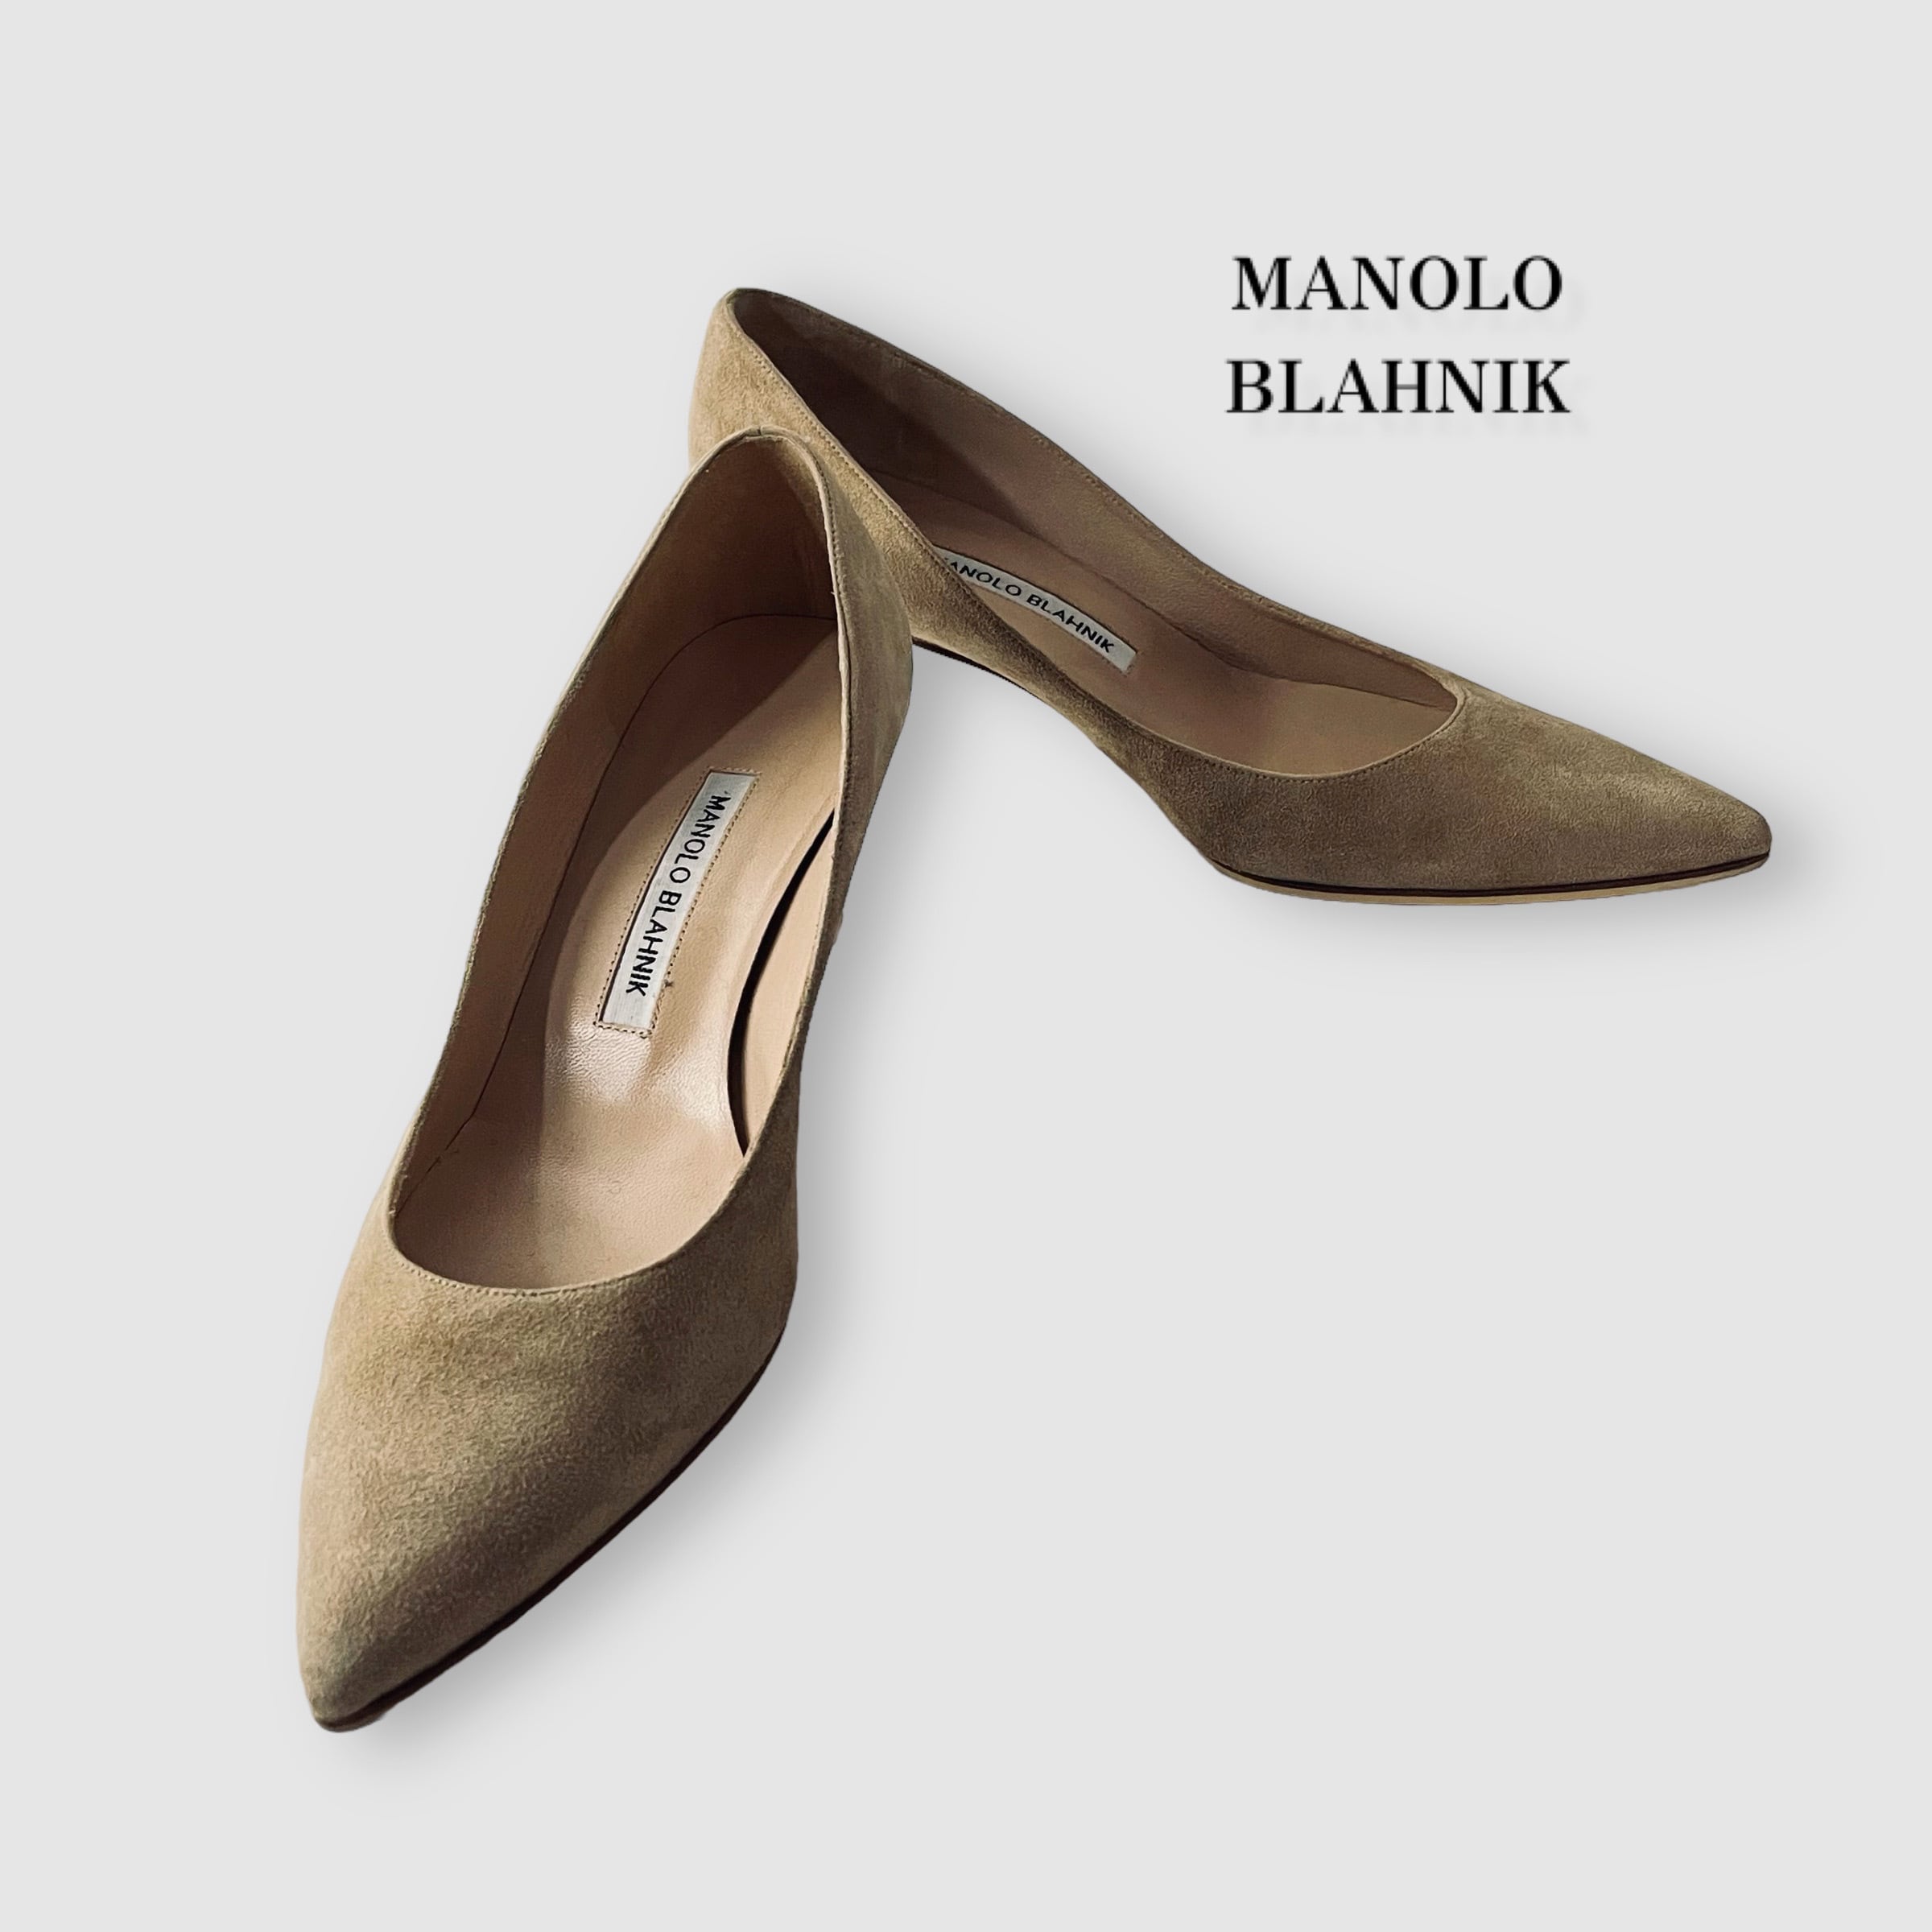 MANOLO BLAHNIK マノロブラニク レオパード 36 季節のおすすめ商品 - 靴